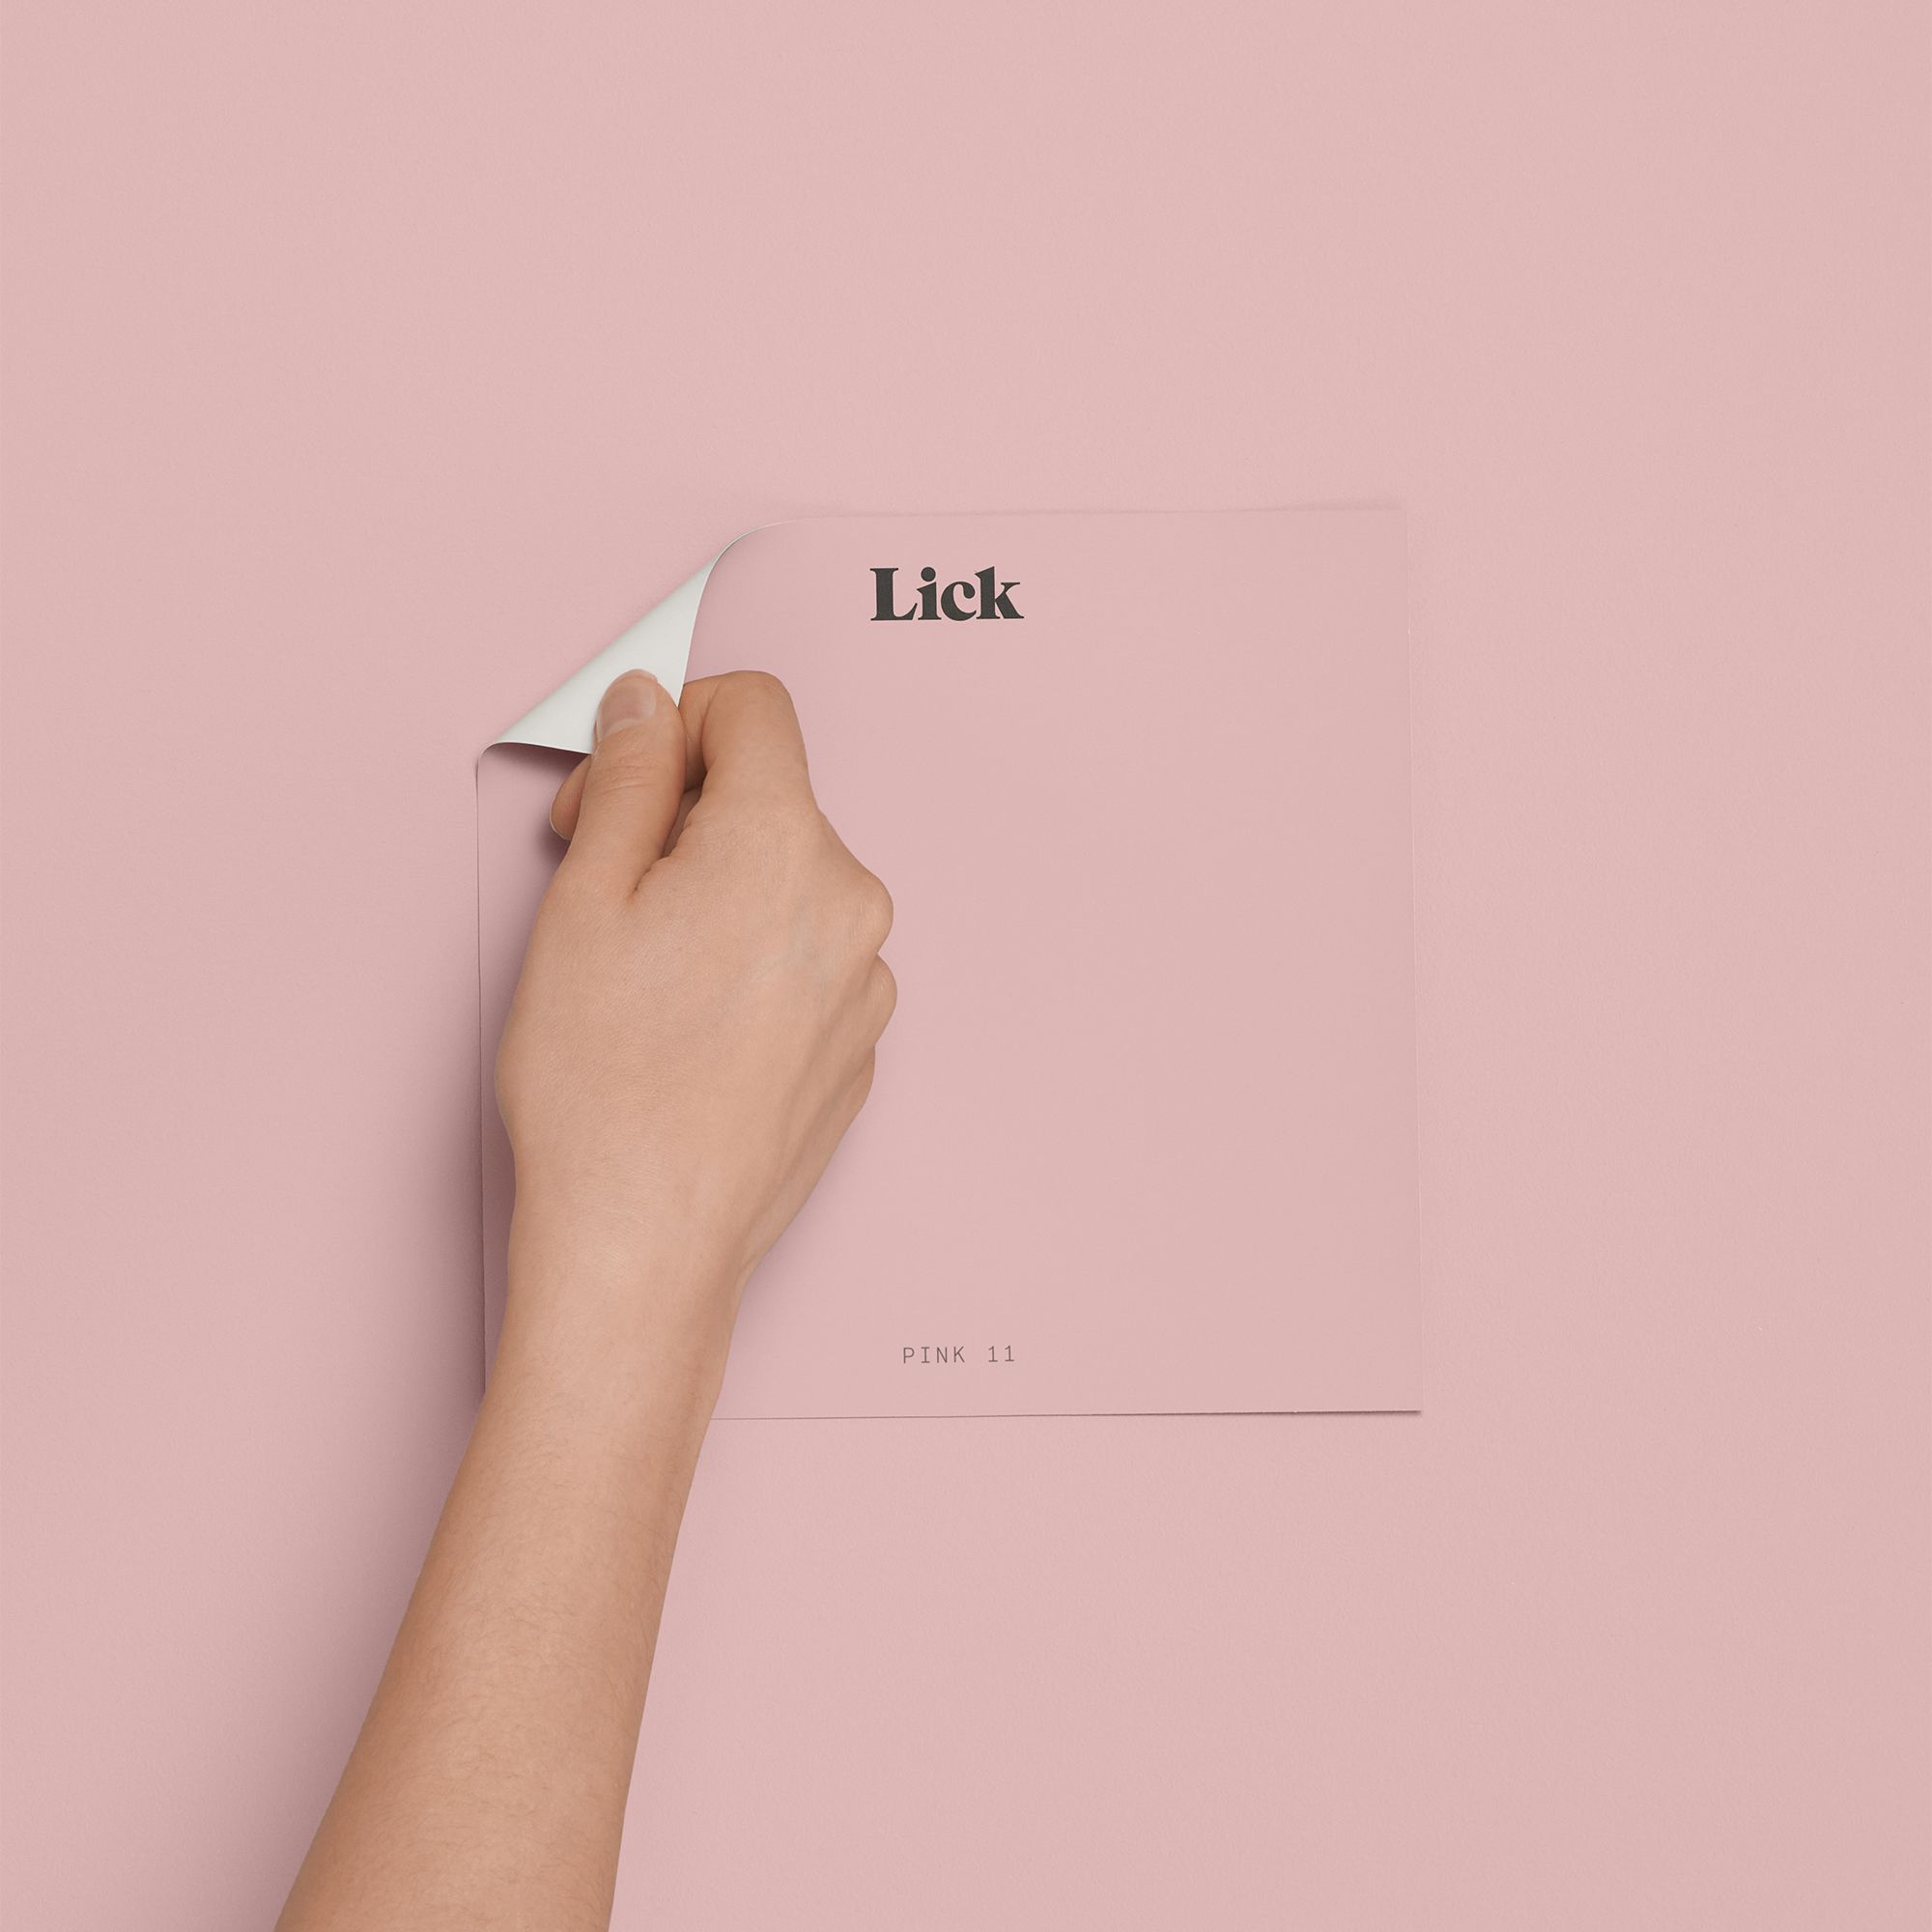 Lick Pink 11 Peel & stick Tester